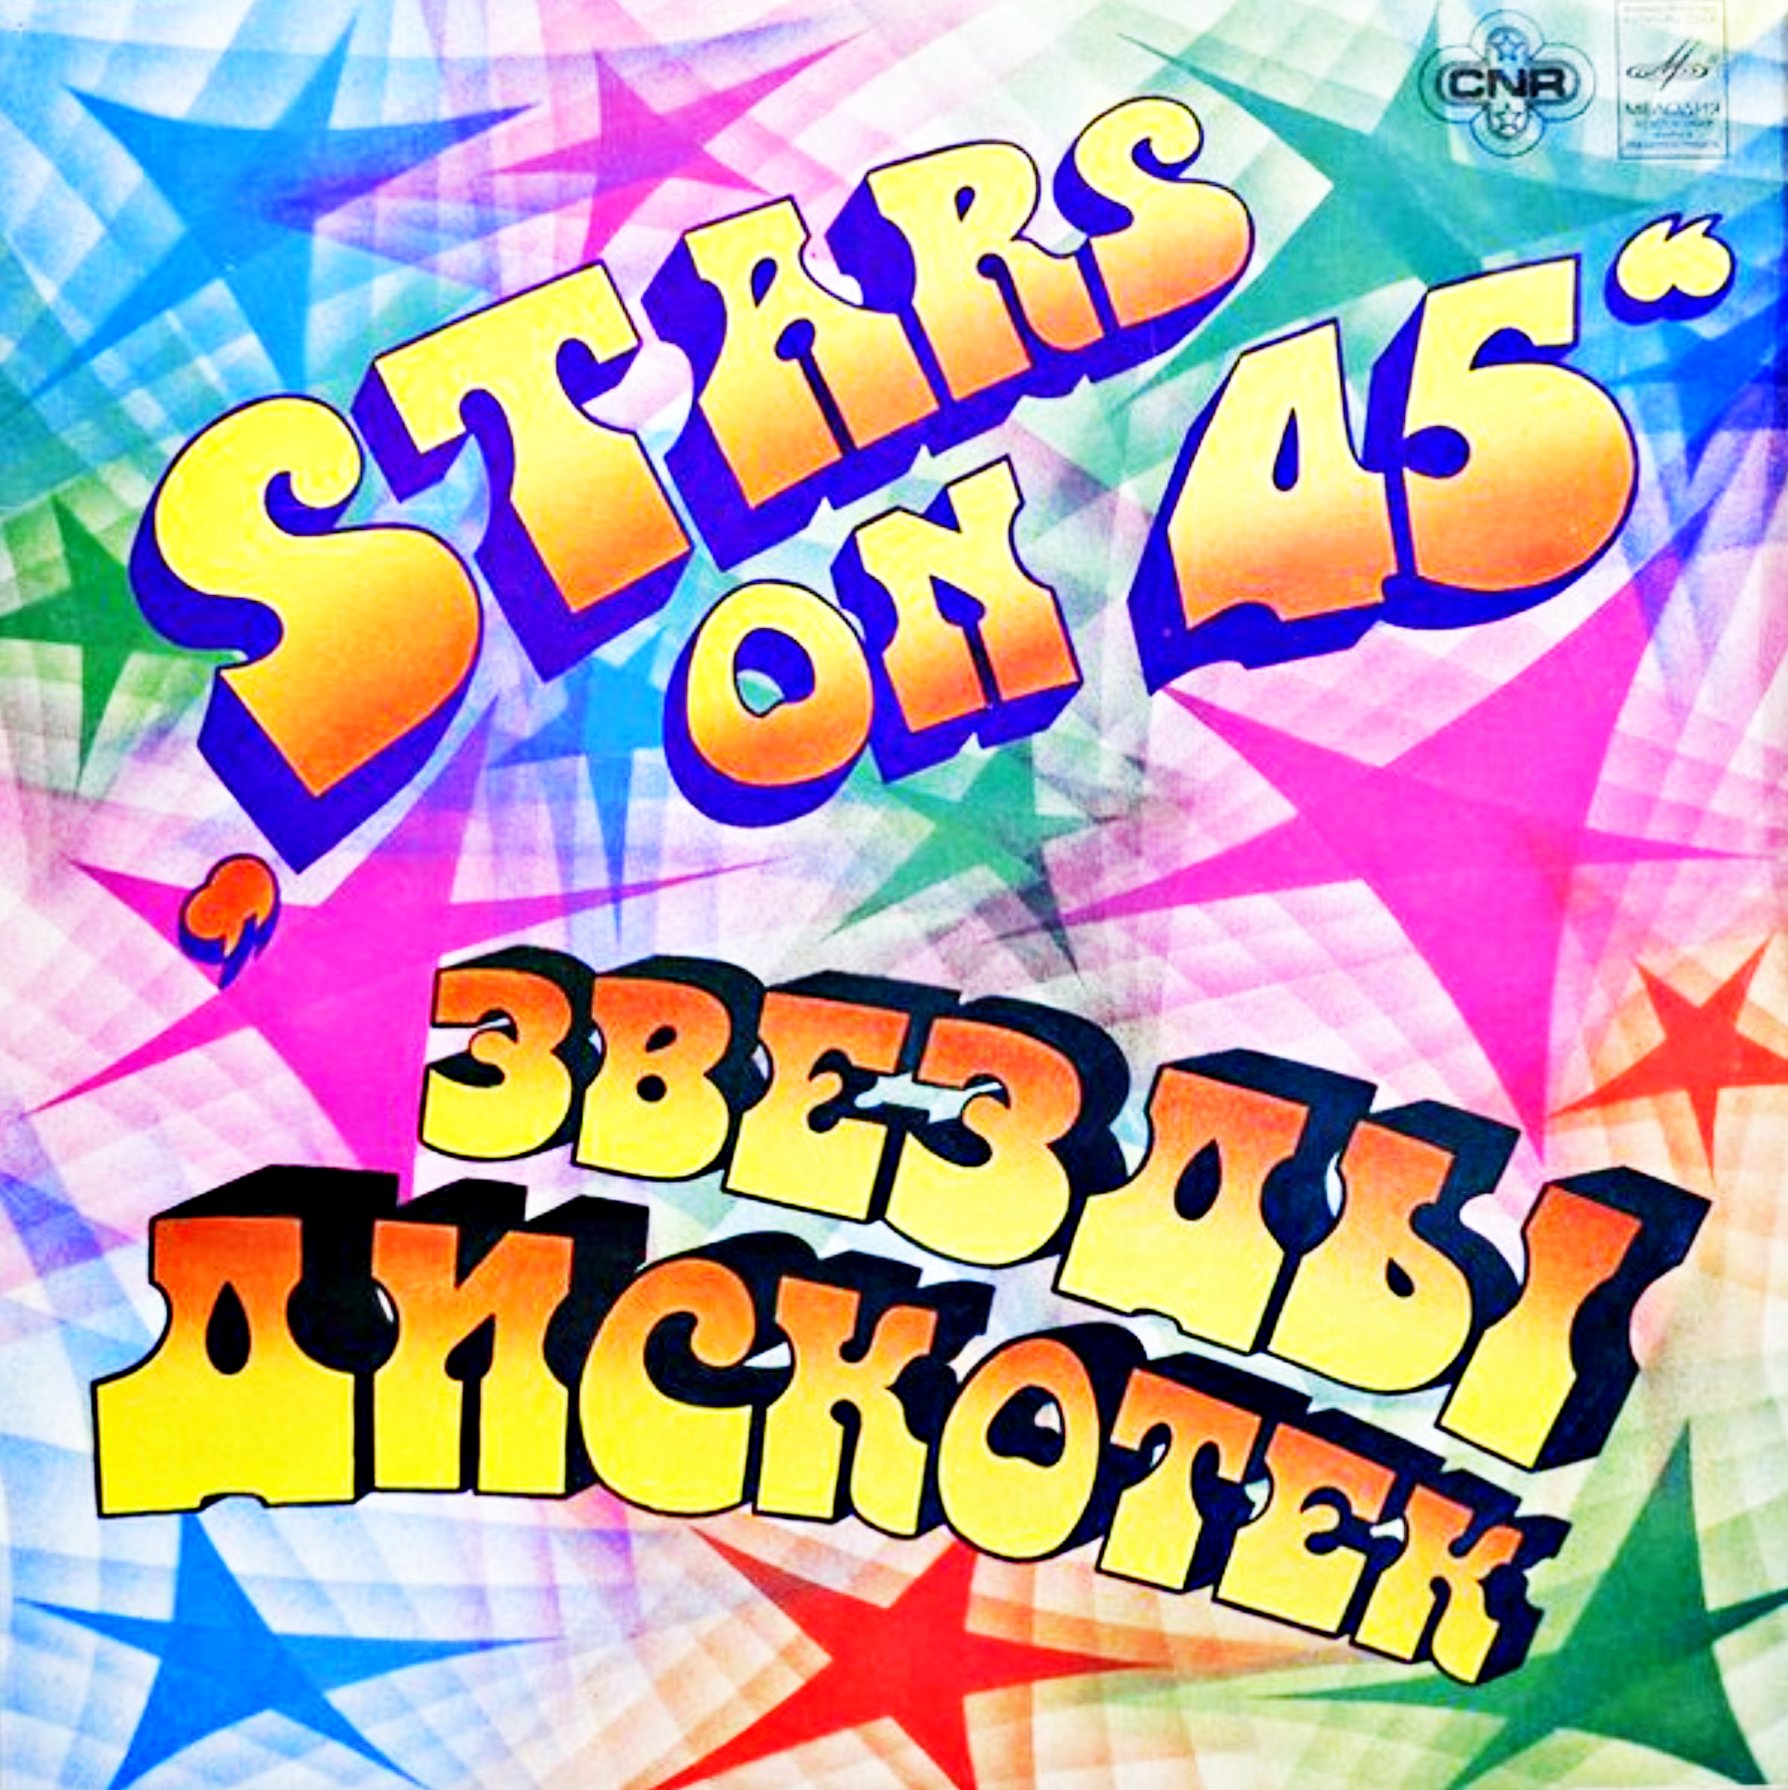 LP Stars On 45 - Disco Stars